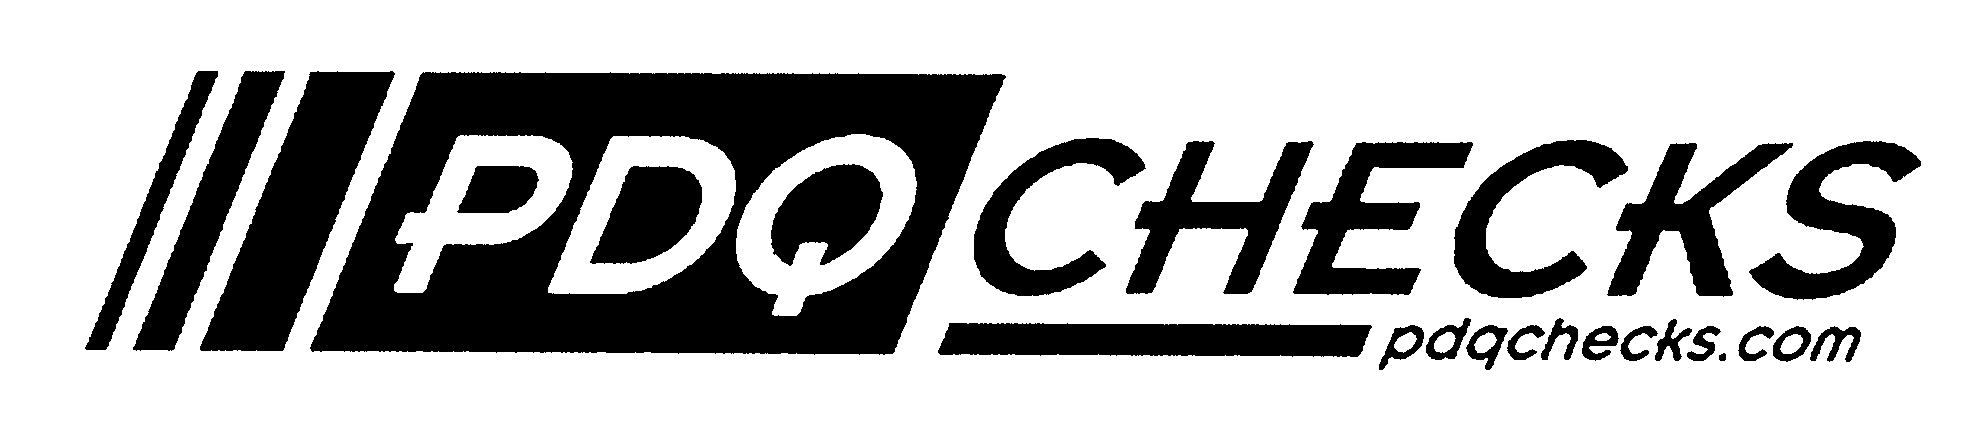 Trademark Logo PDQ CHECKS PDQCHECKS.COM